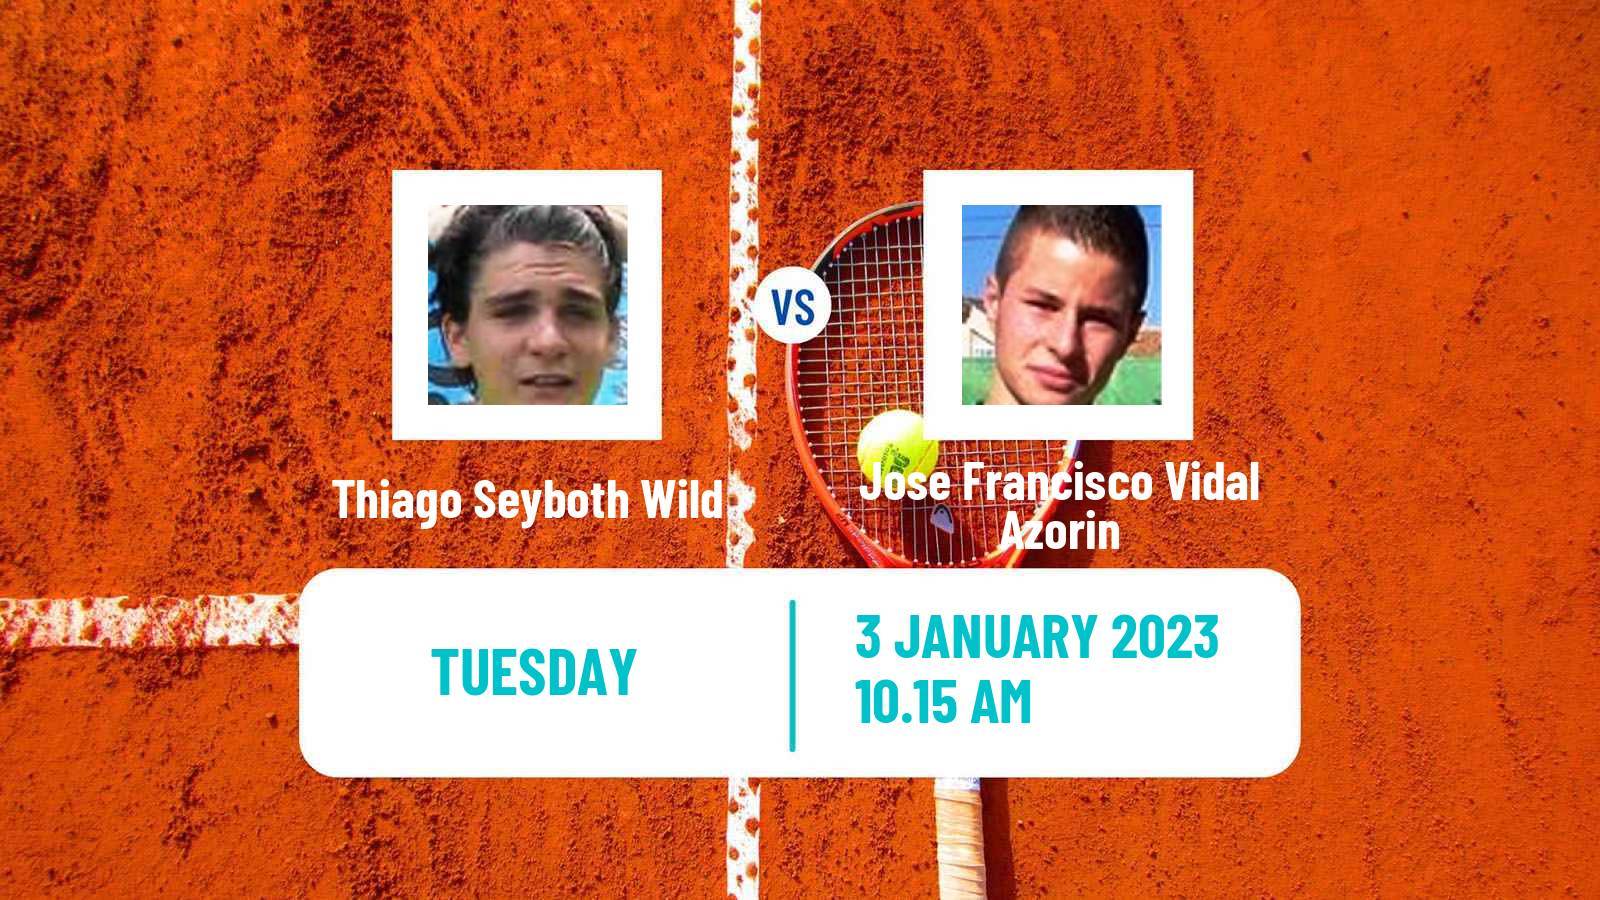 Tennis ATP Challenger Thiago Seyboth Wild - Jose Francisco Vidal Azorin